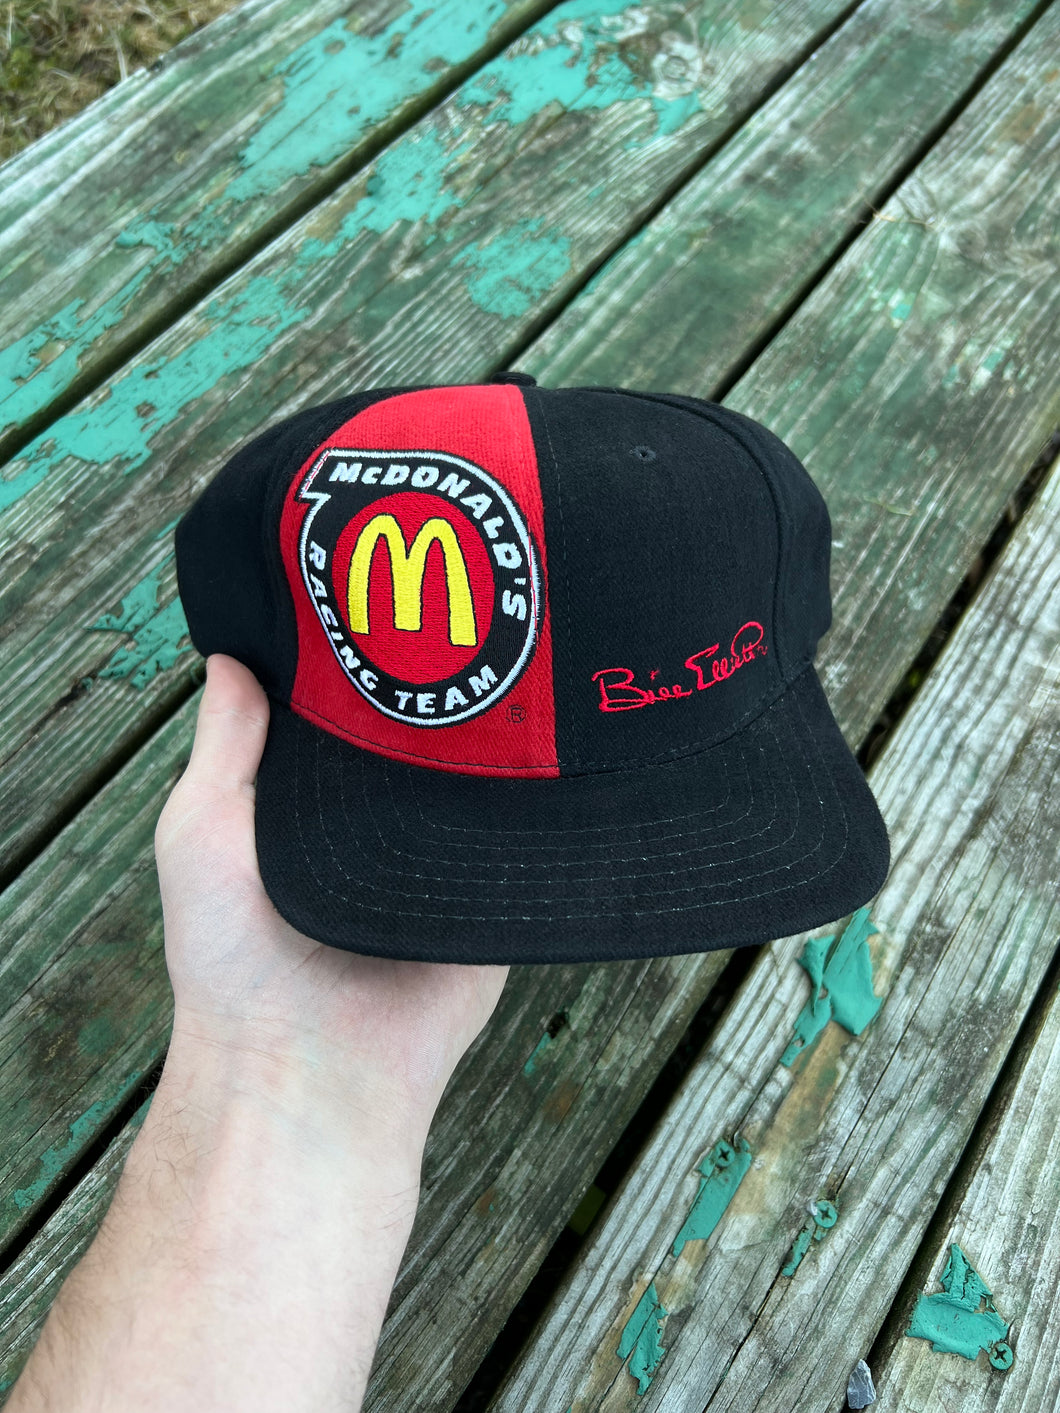 Vintage 90s McDonalds Racing SnapBack Hats